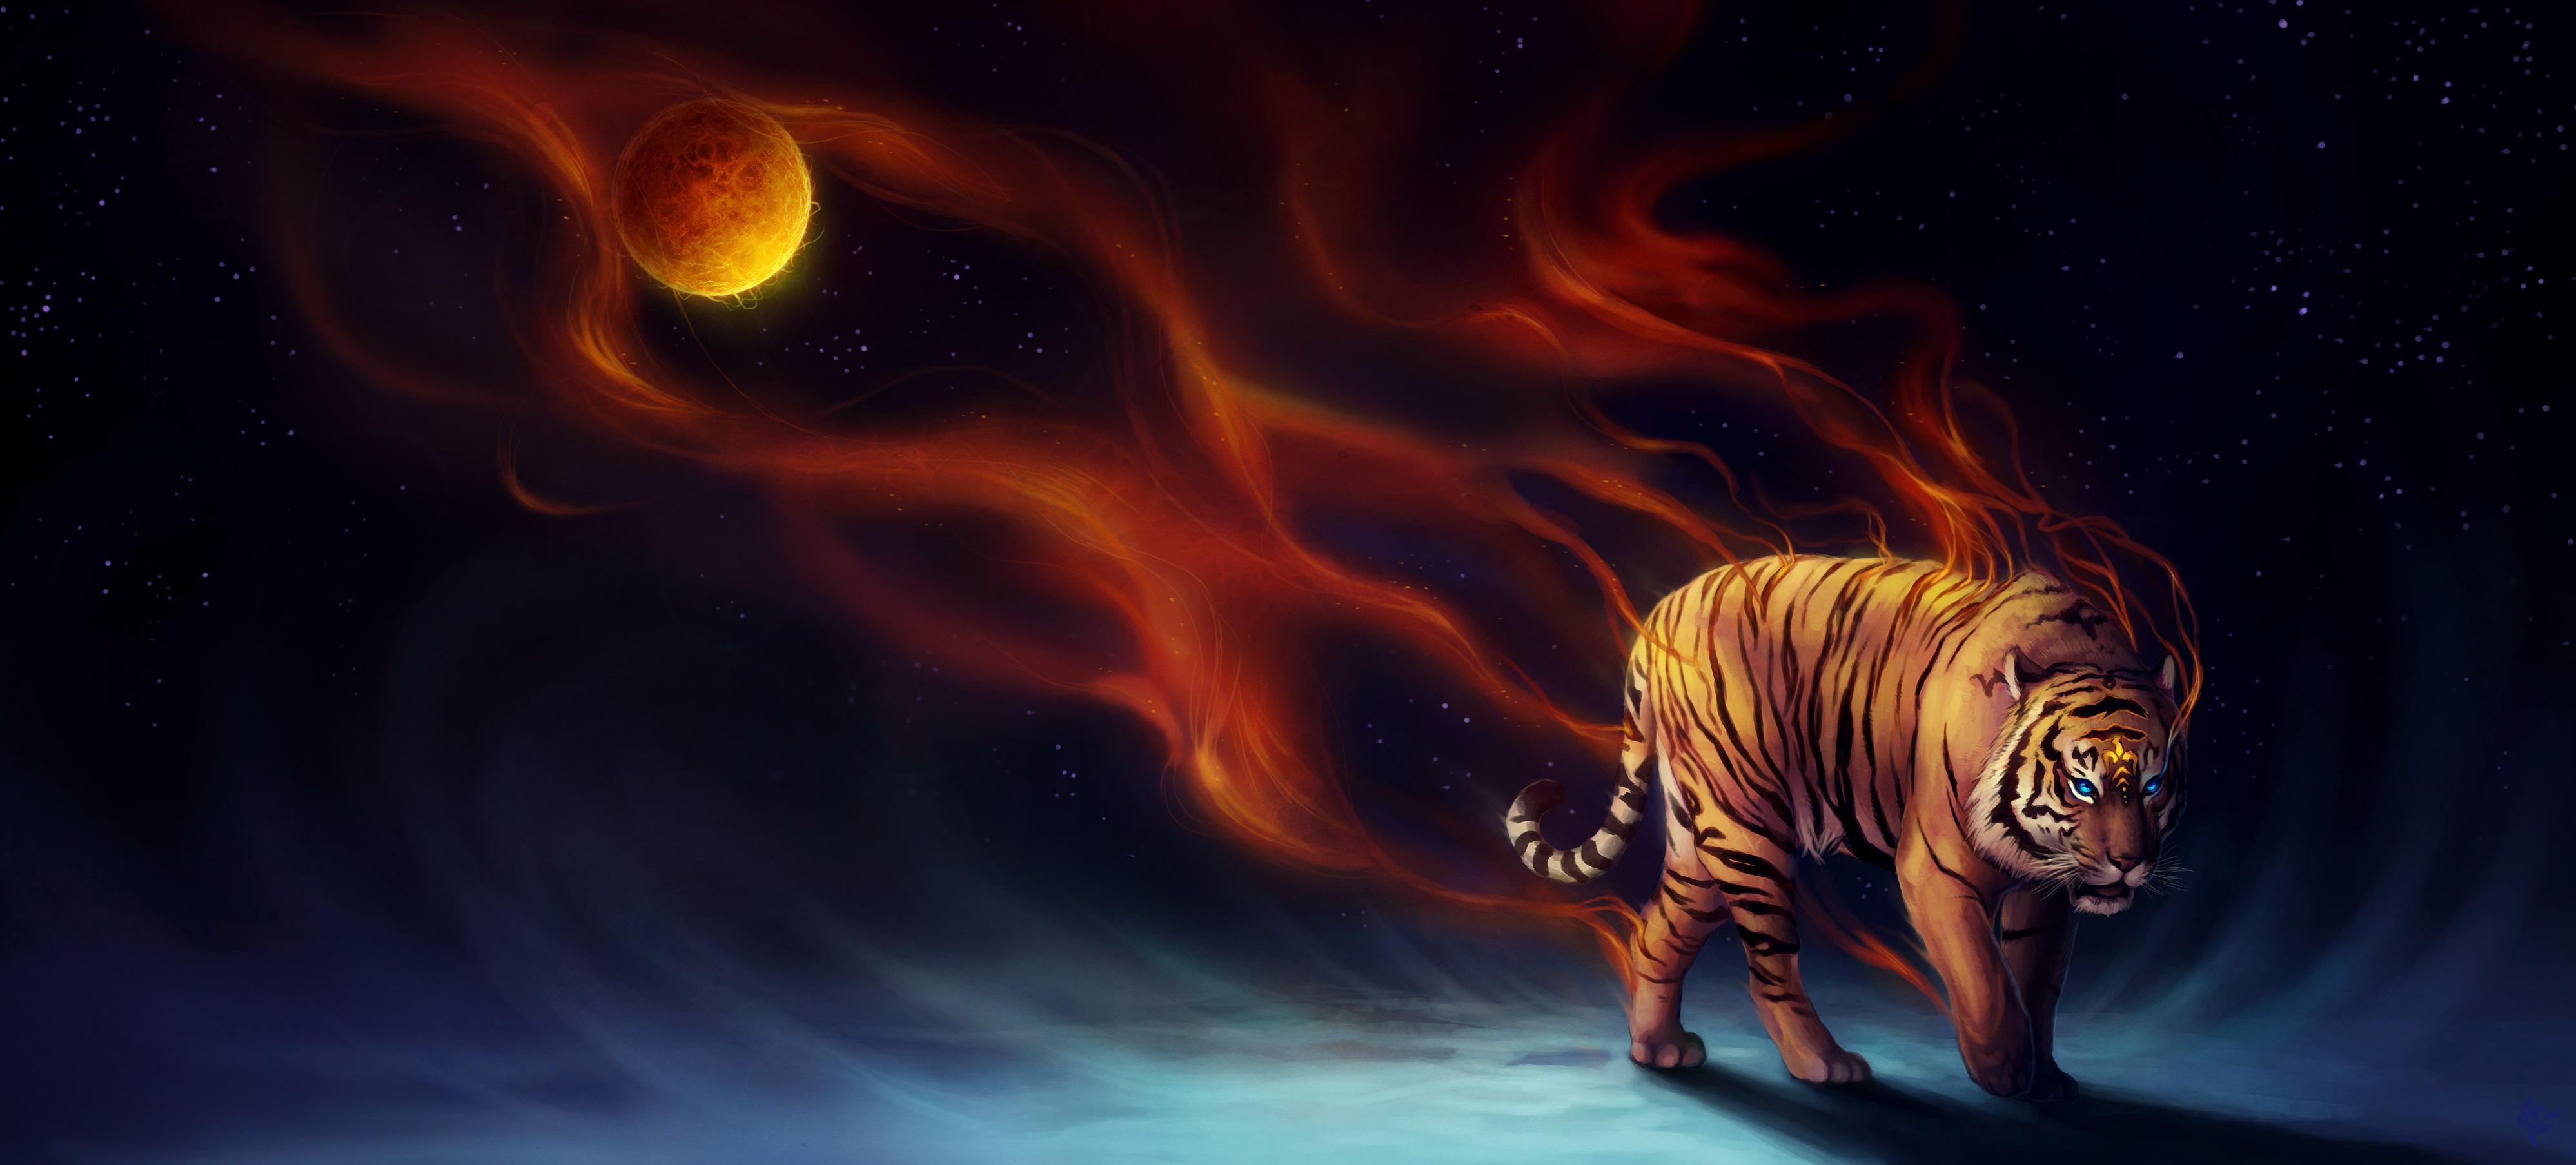 Tiger Fantasy Magical Flame 4k, HD Artist, 4k Wallpaper, Image